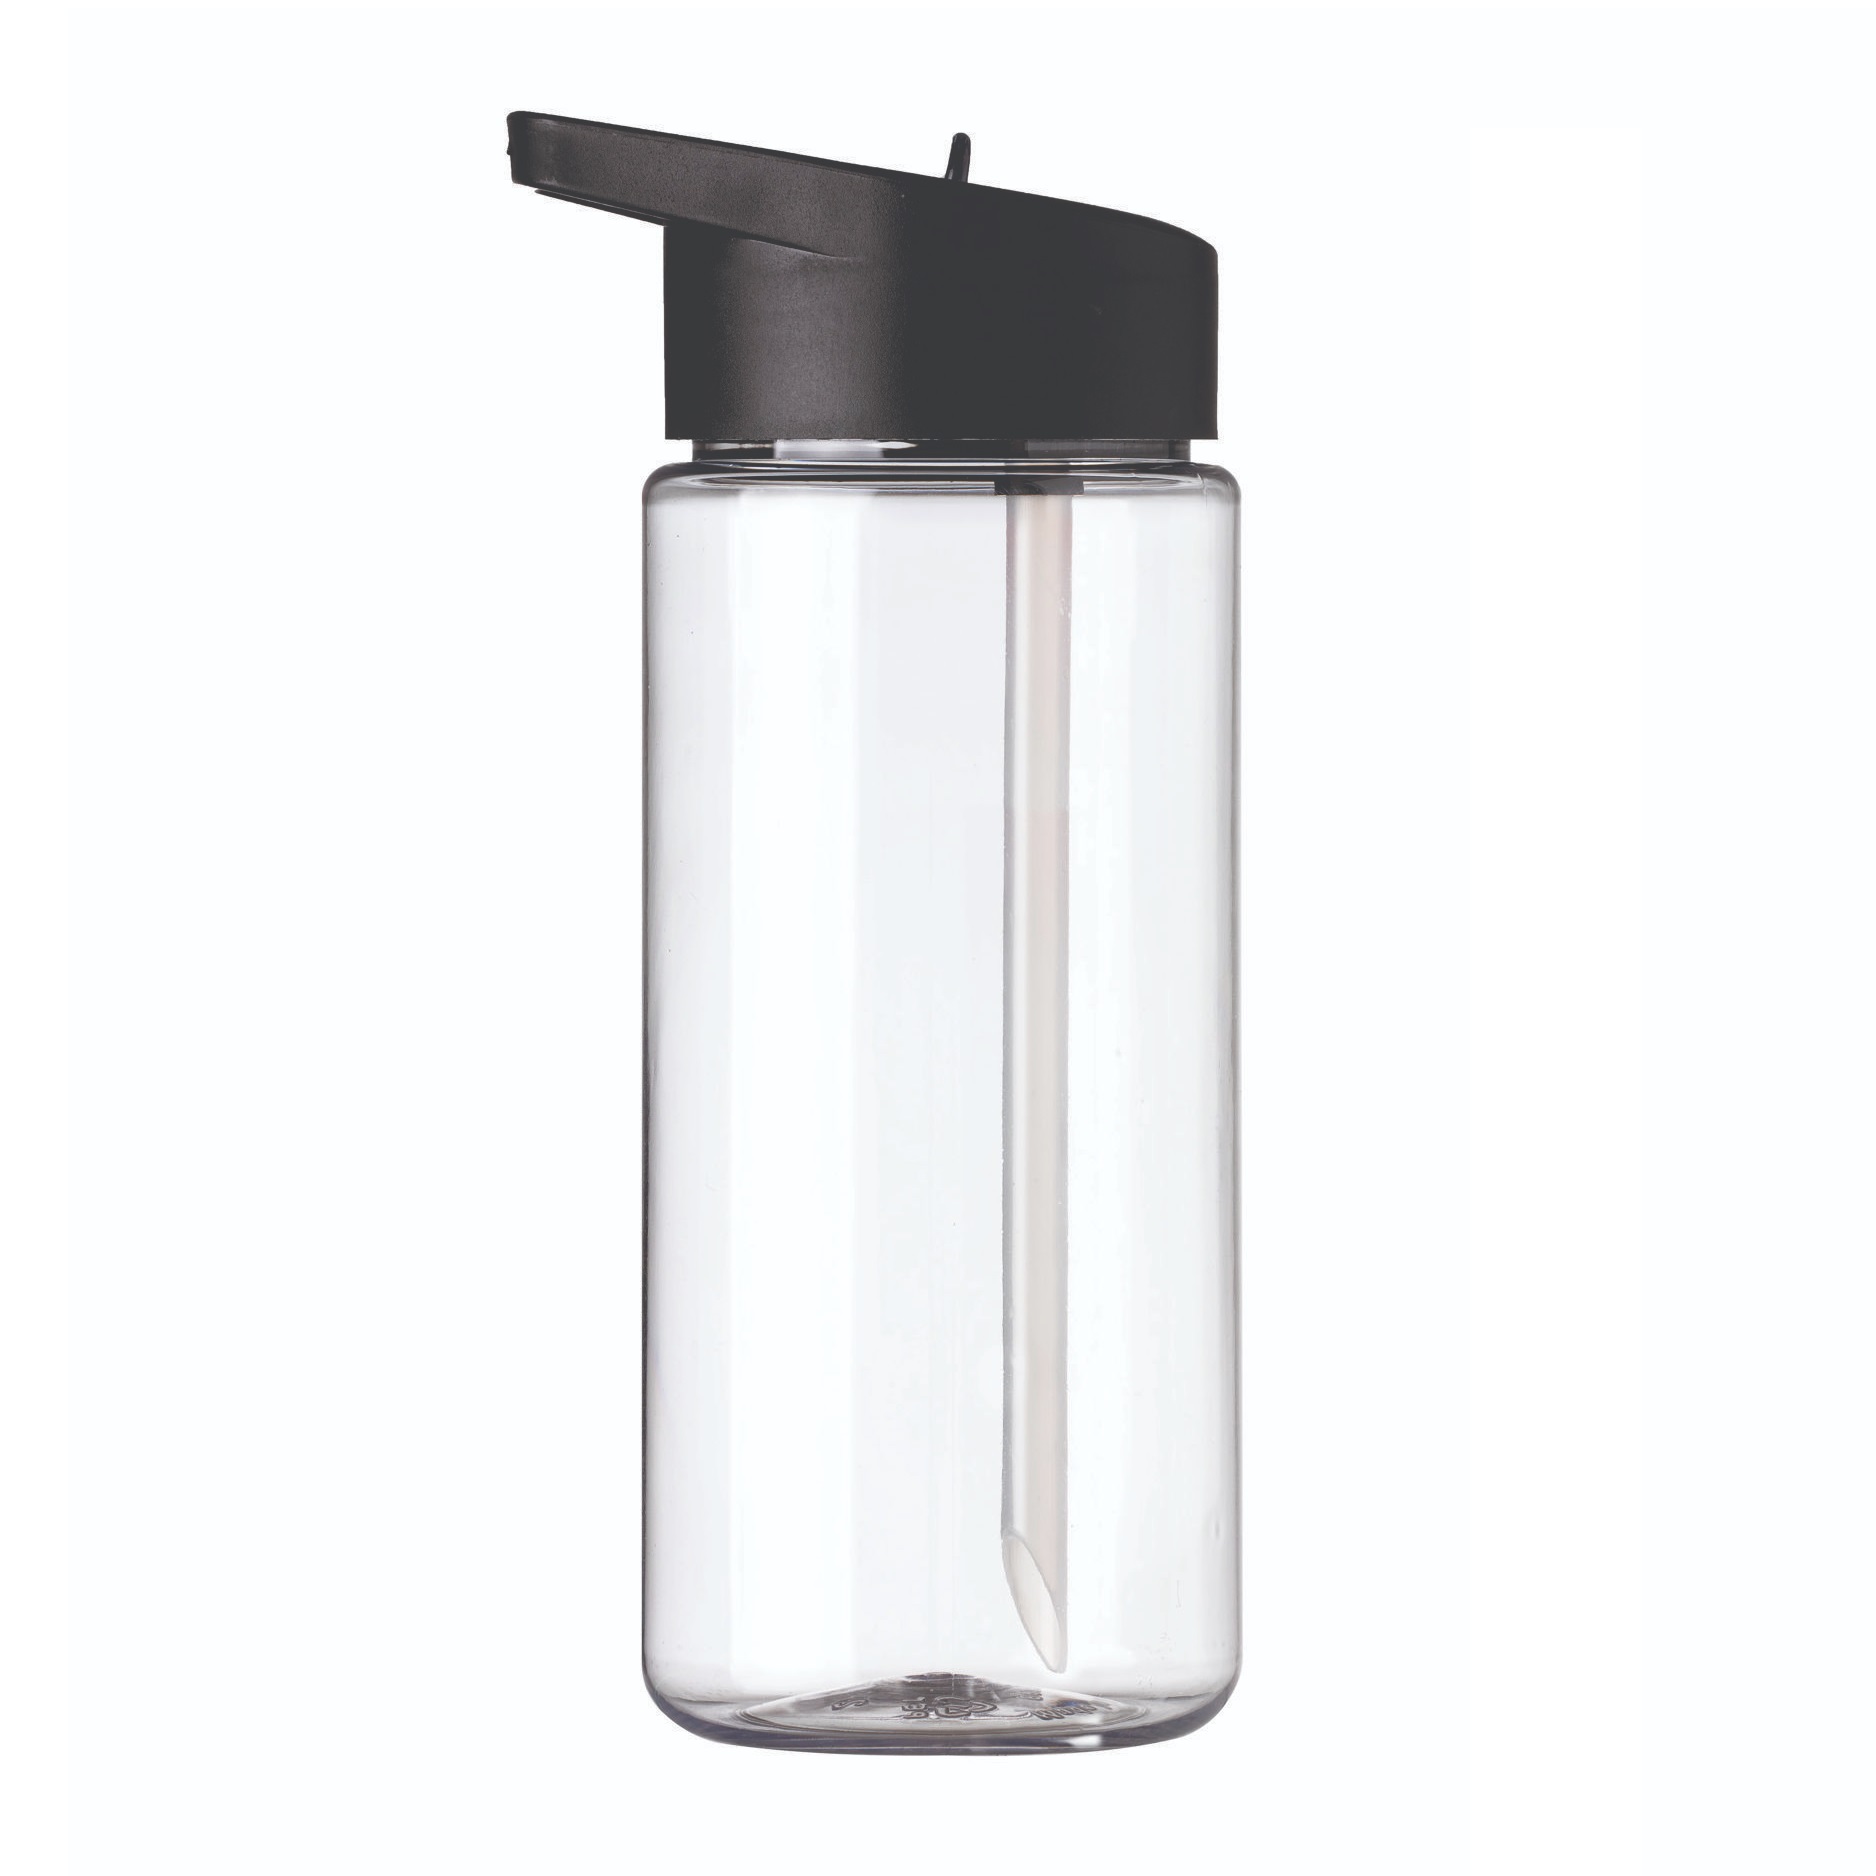 Botella Descartable PET – Transparente – Formato 2.5 Lt. (1000 unidades)